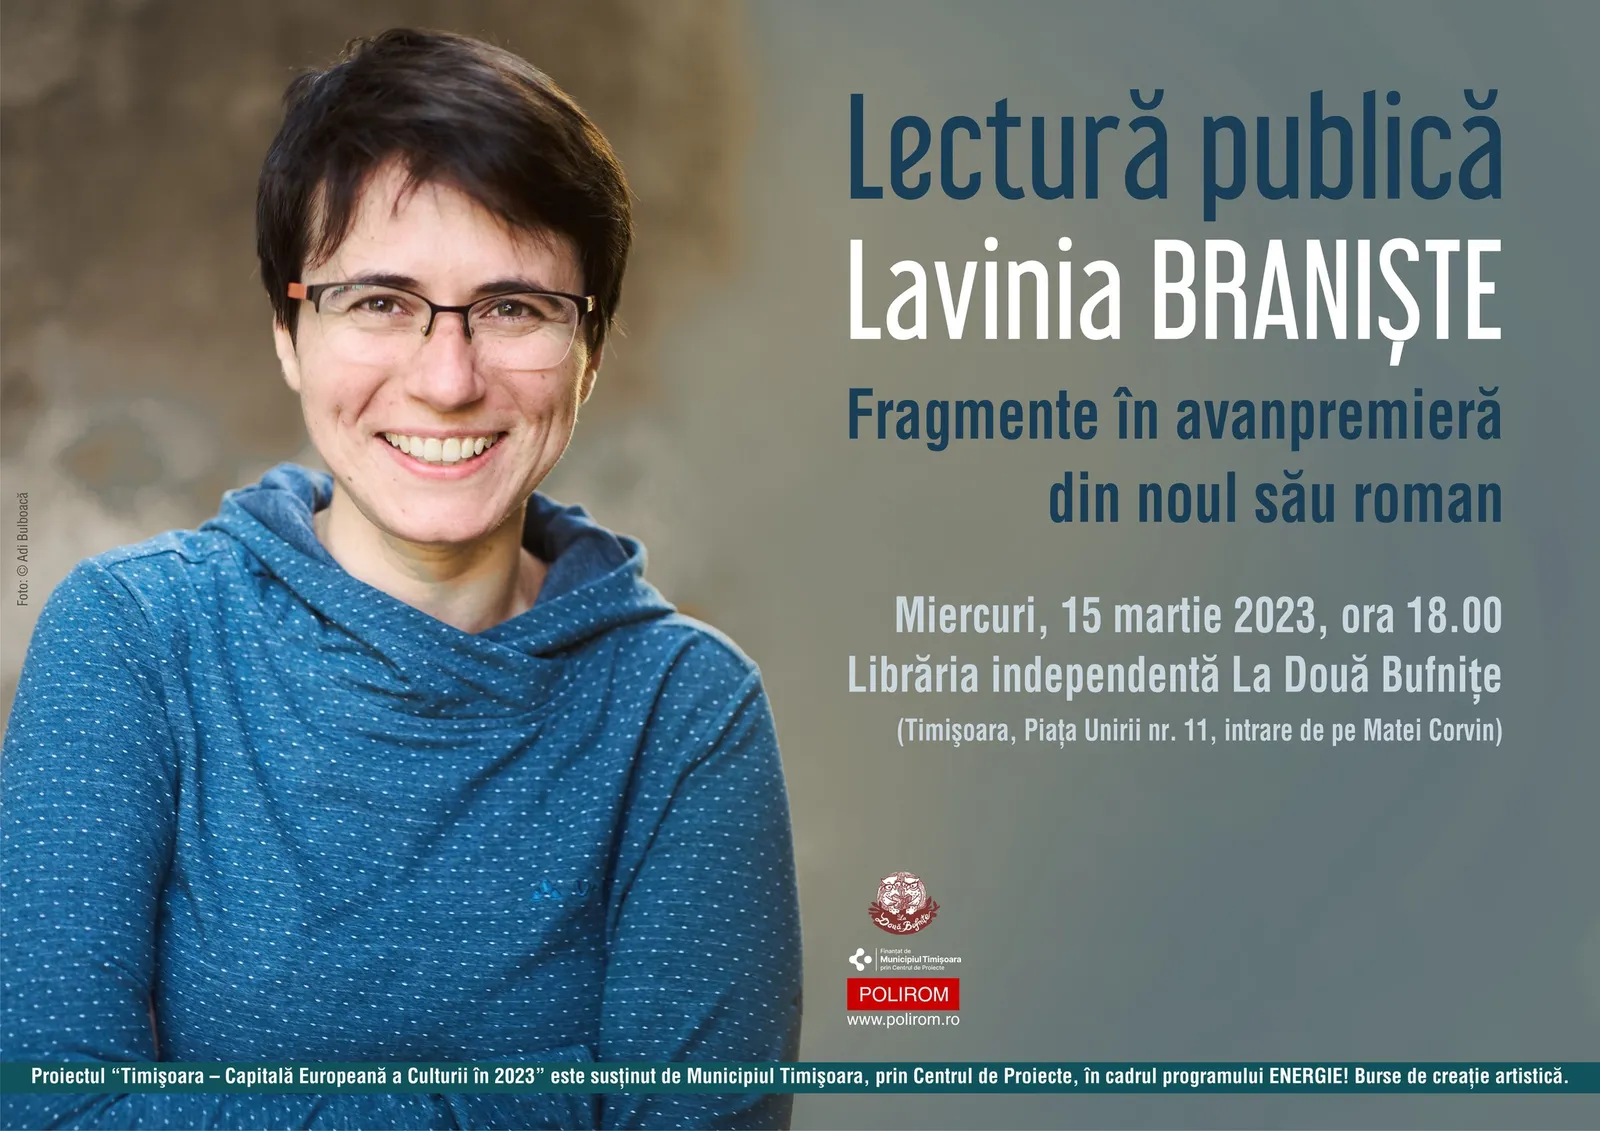 Lavinia Braniște, Public Reading from Manuscript